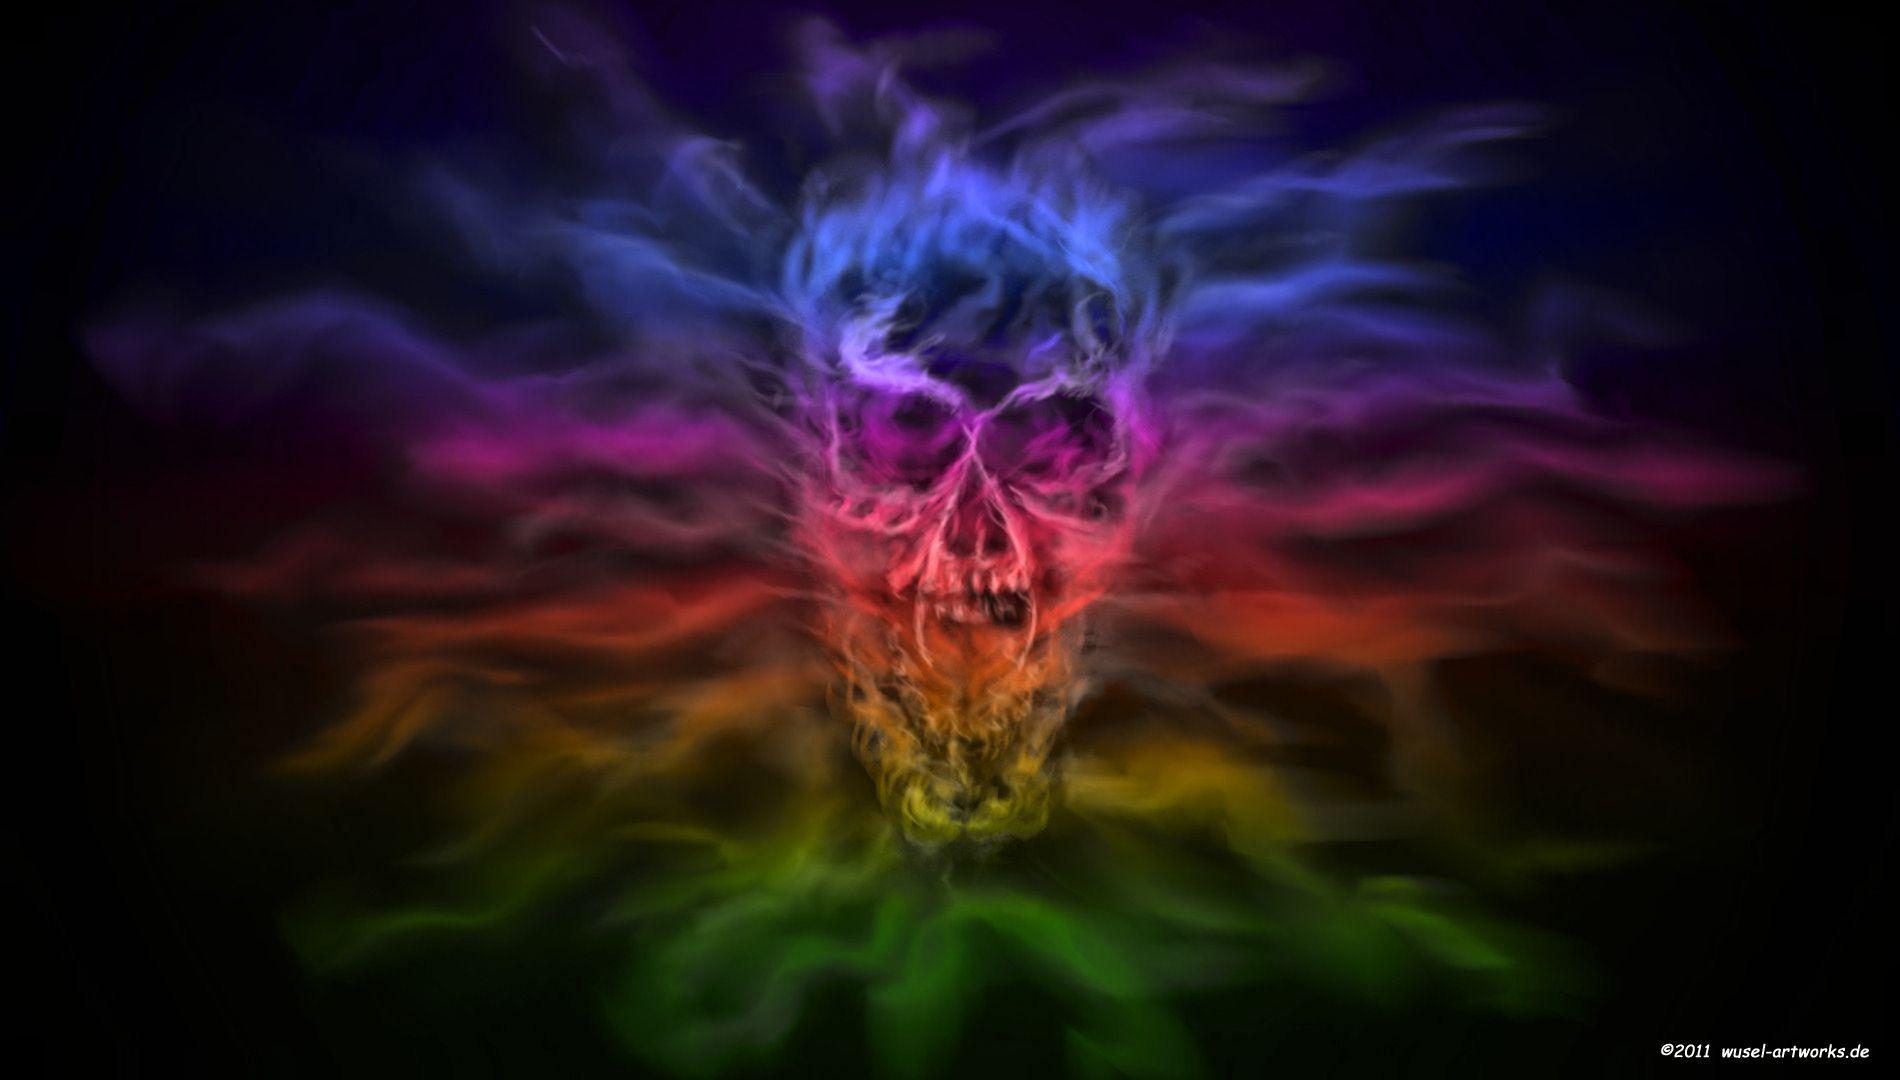 Rainbow Fire Flames. Wallpaper Skull HD Rainbow Flame 1900x1080 459197. Skulls drawing, Wallpaper, Skull